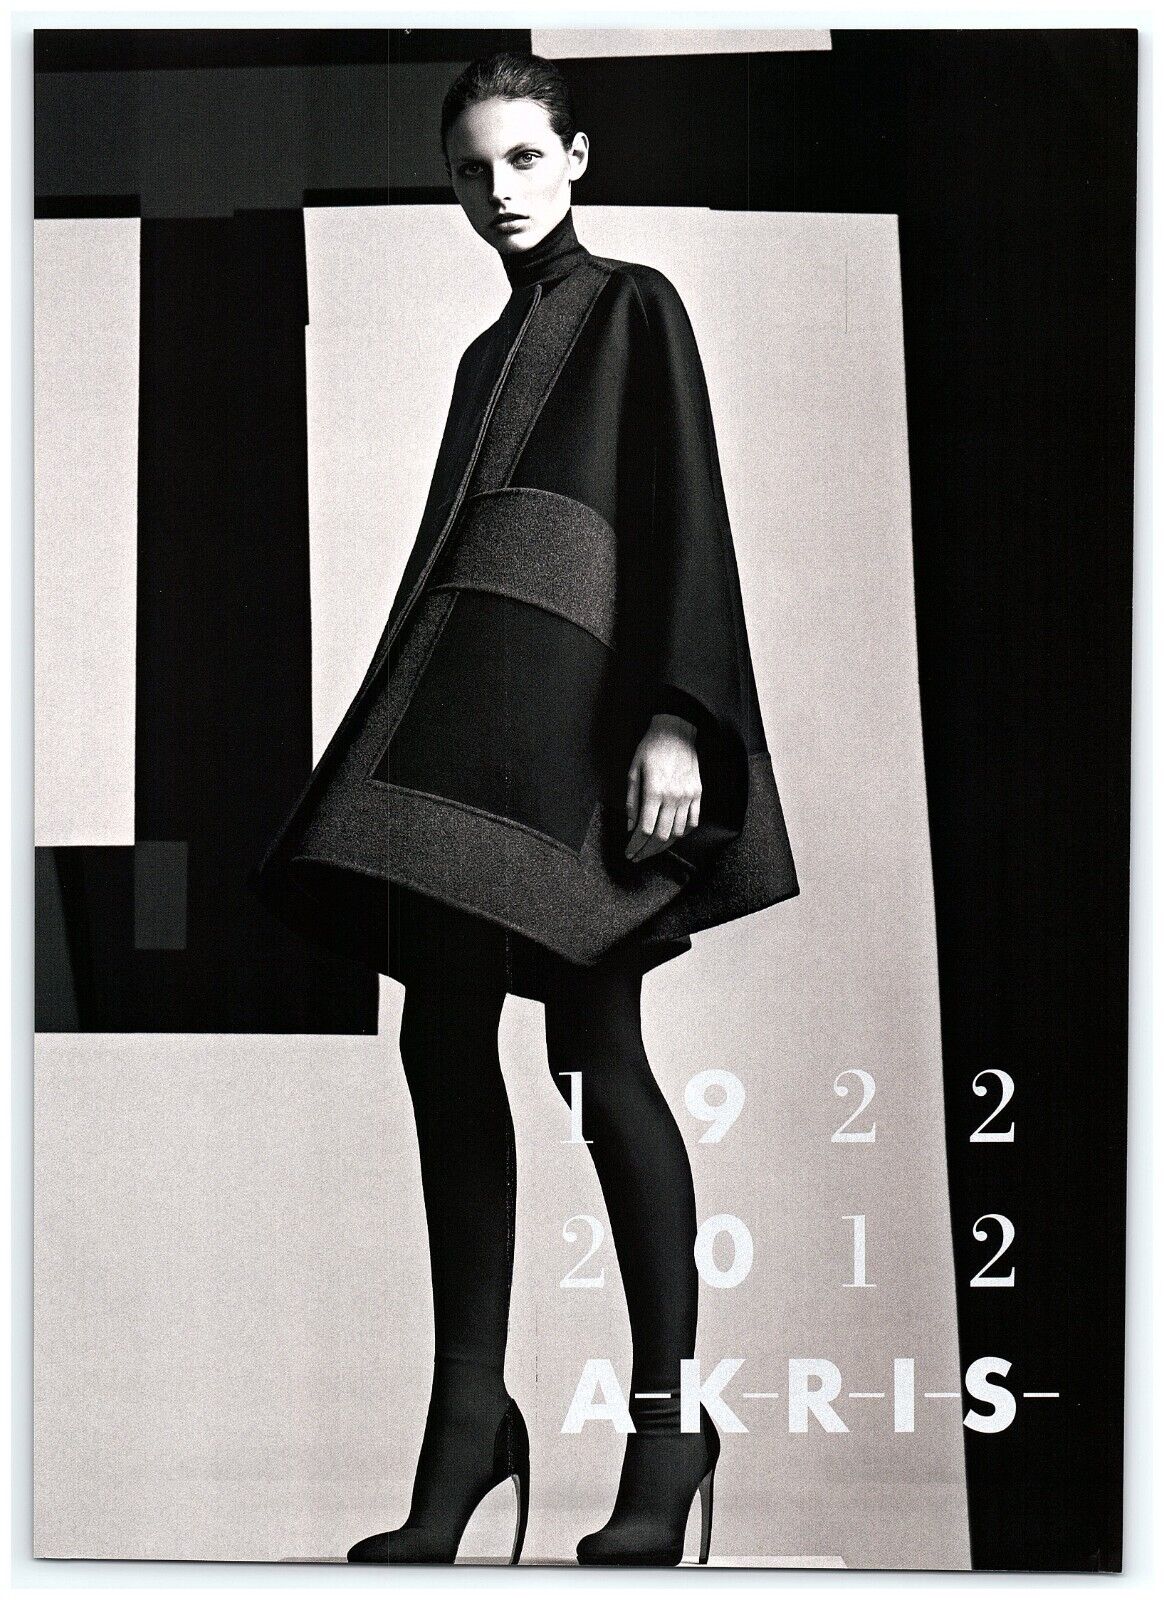 2012 Akris Print Ad 1922 2112 High Heeled Leggings Oversized Blocked Coat Jacket